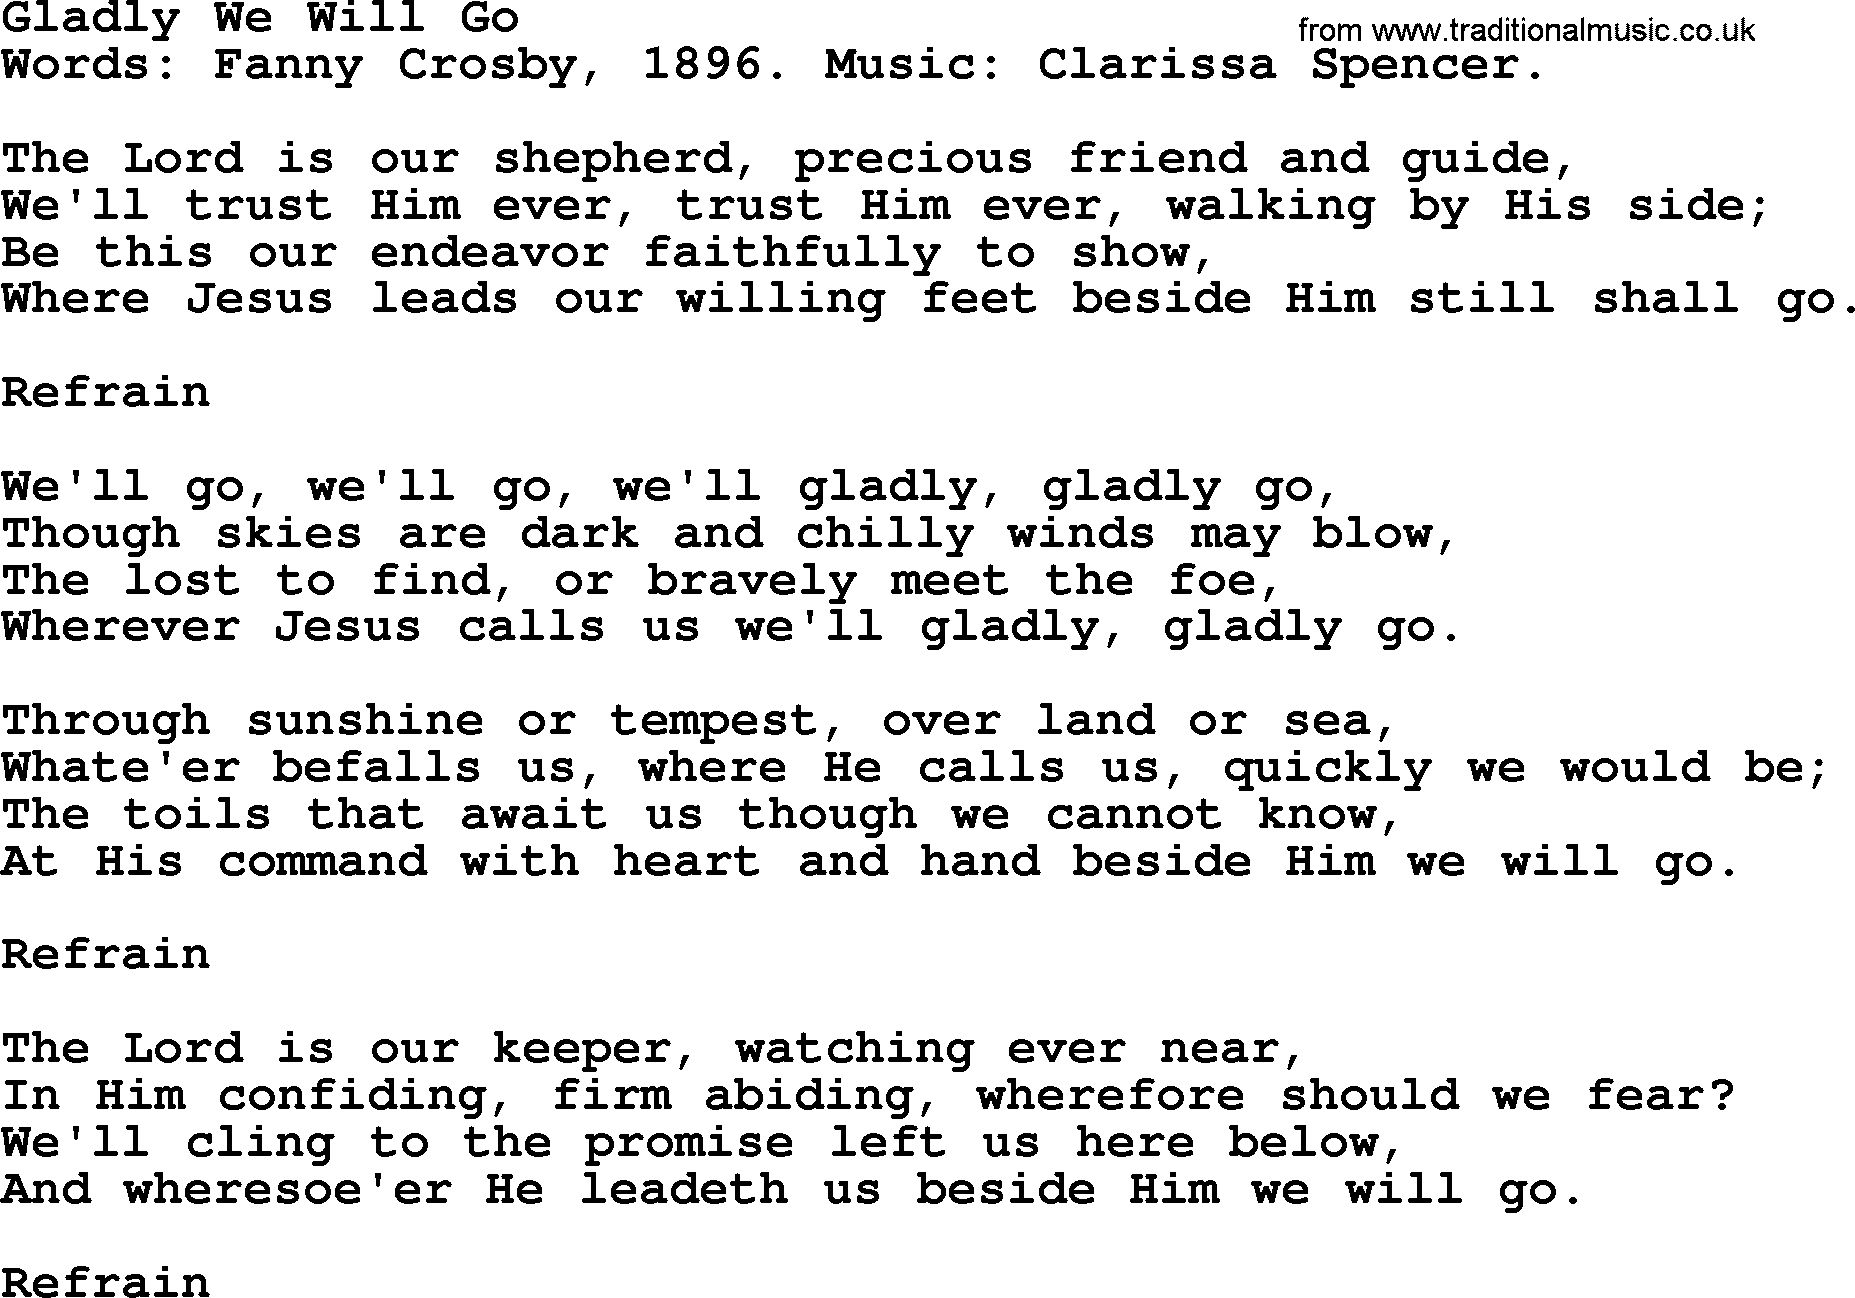 Fanny Crosby song: Gladly We Will Go, lyrics